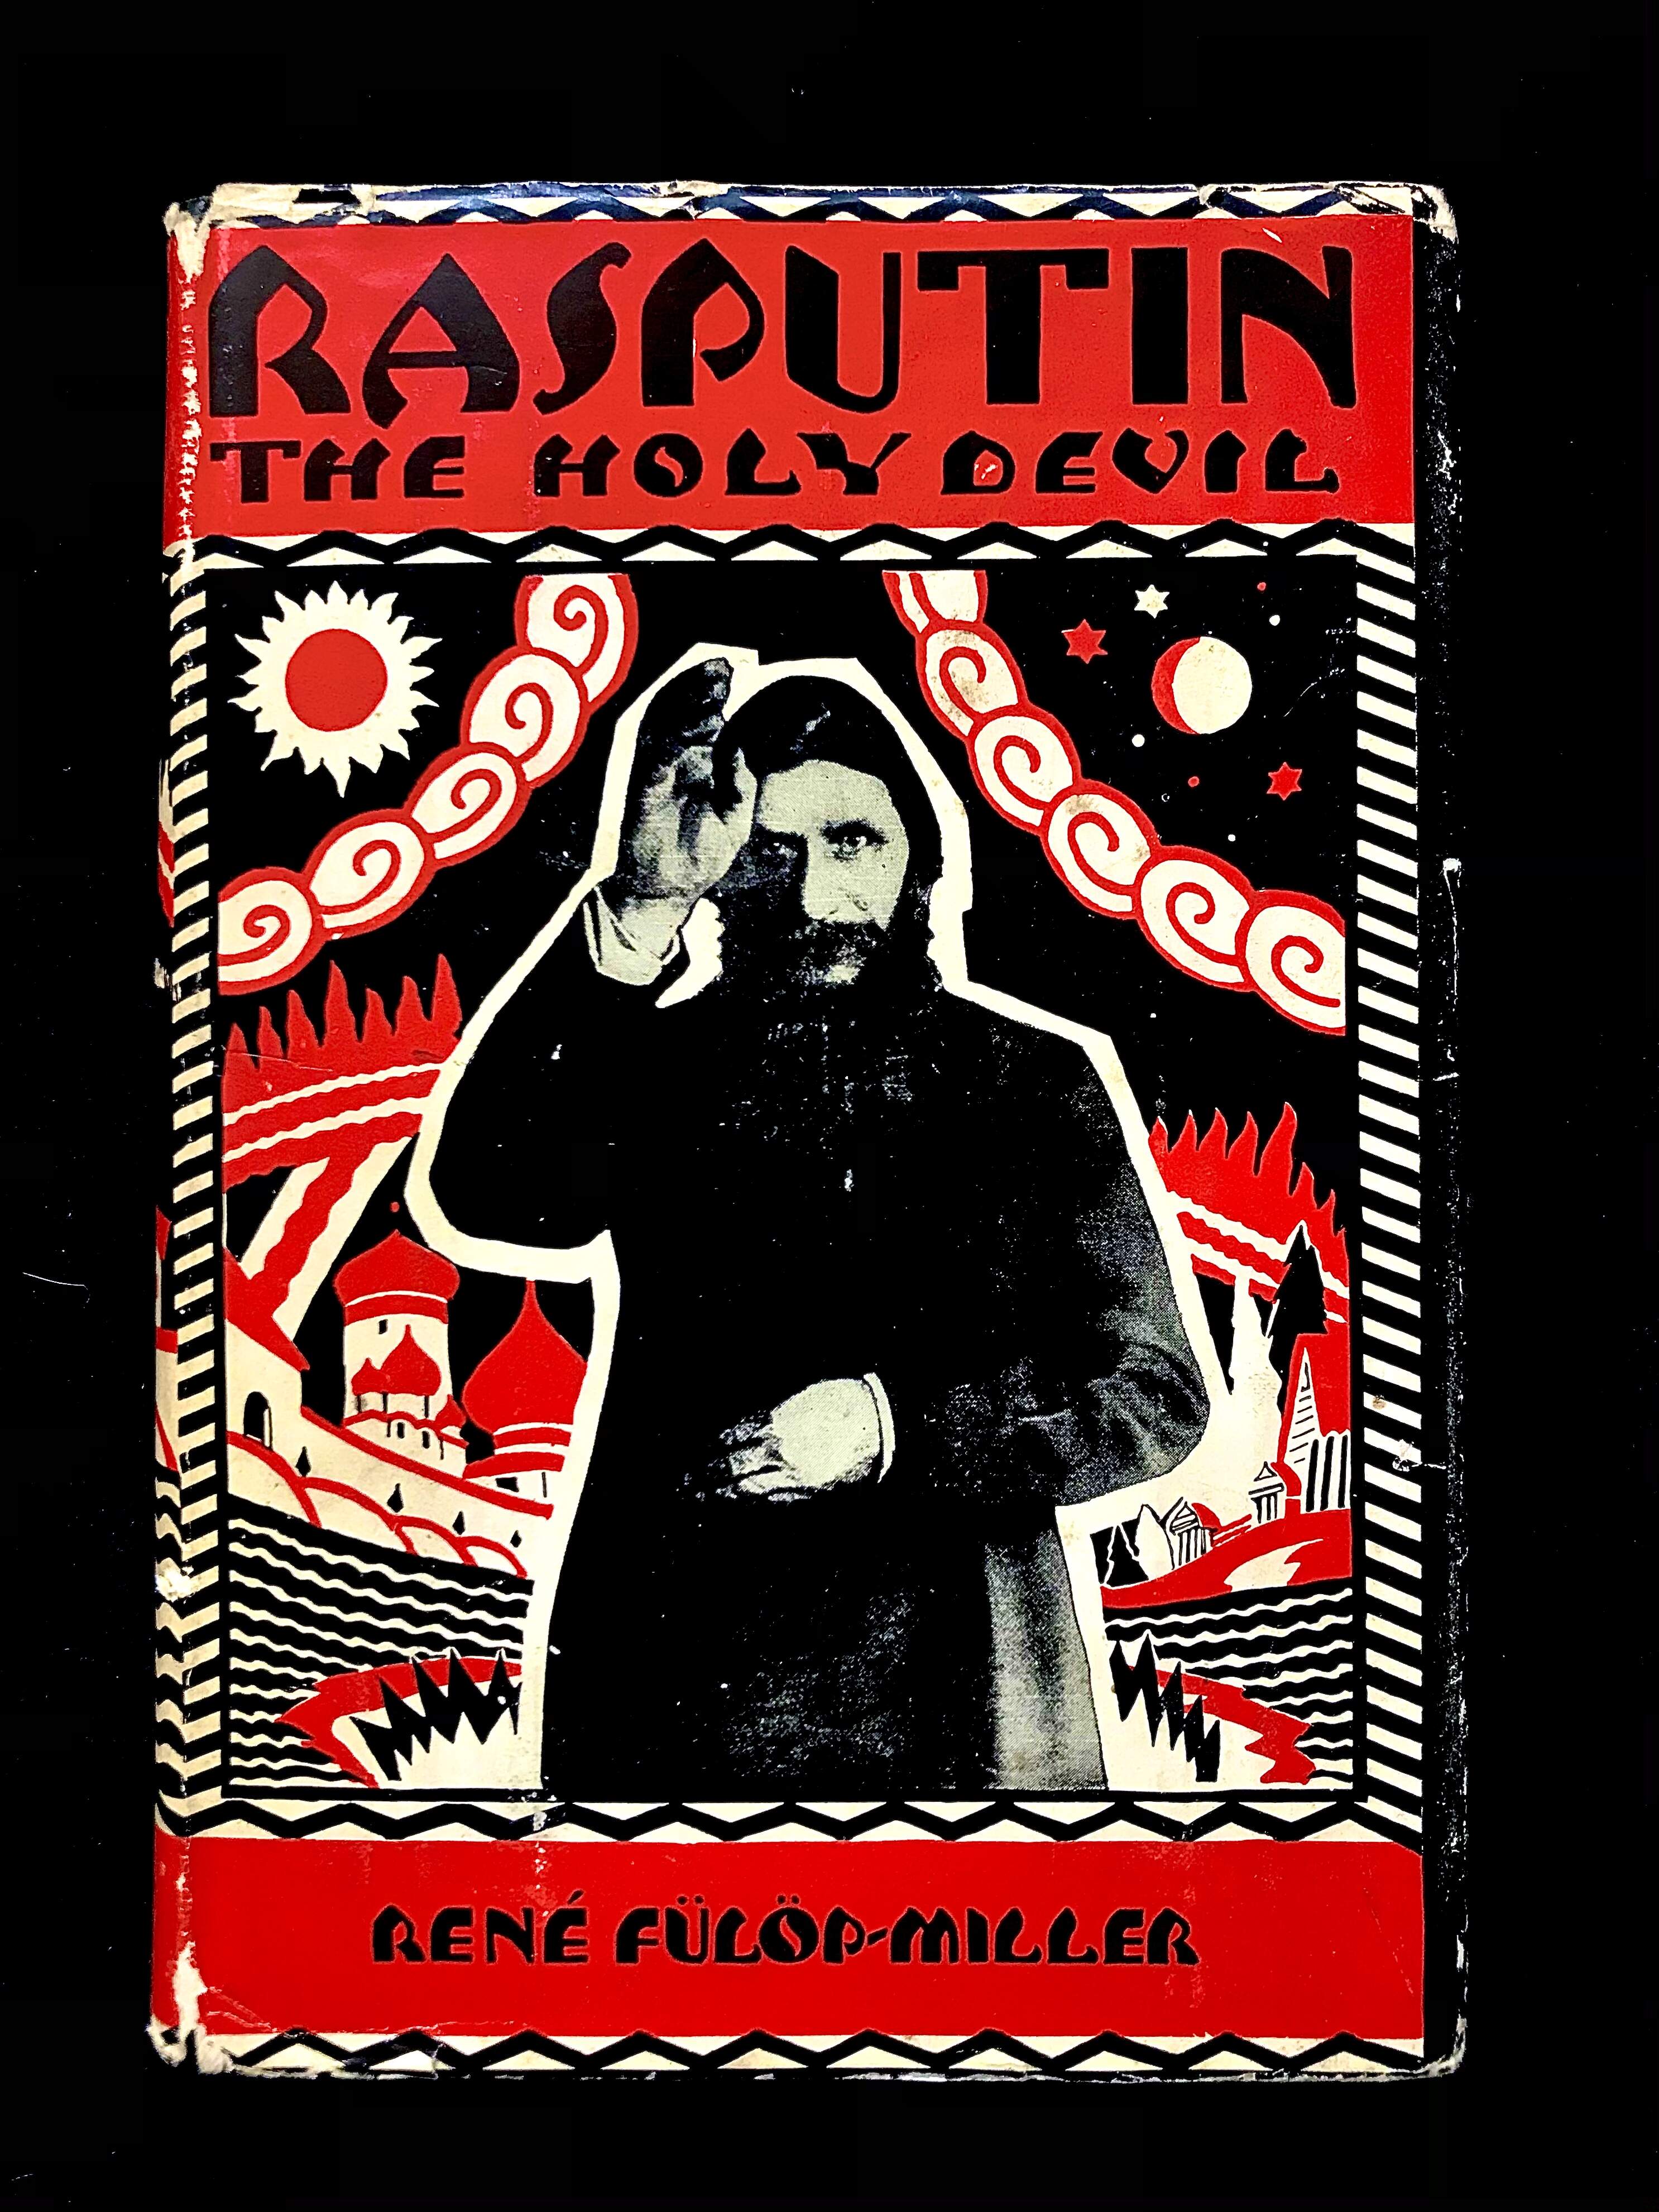 Rasputin The Holy Devil by René Fülöp-Miller